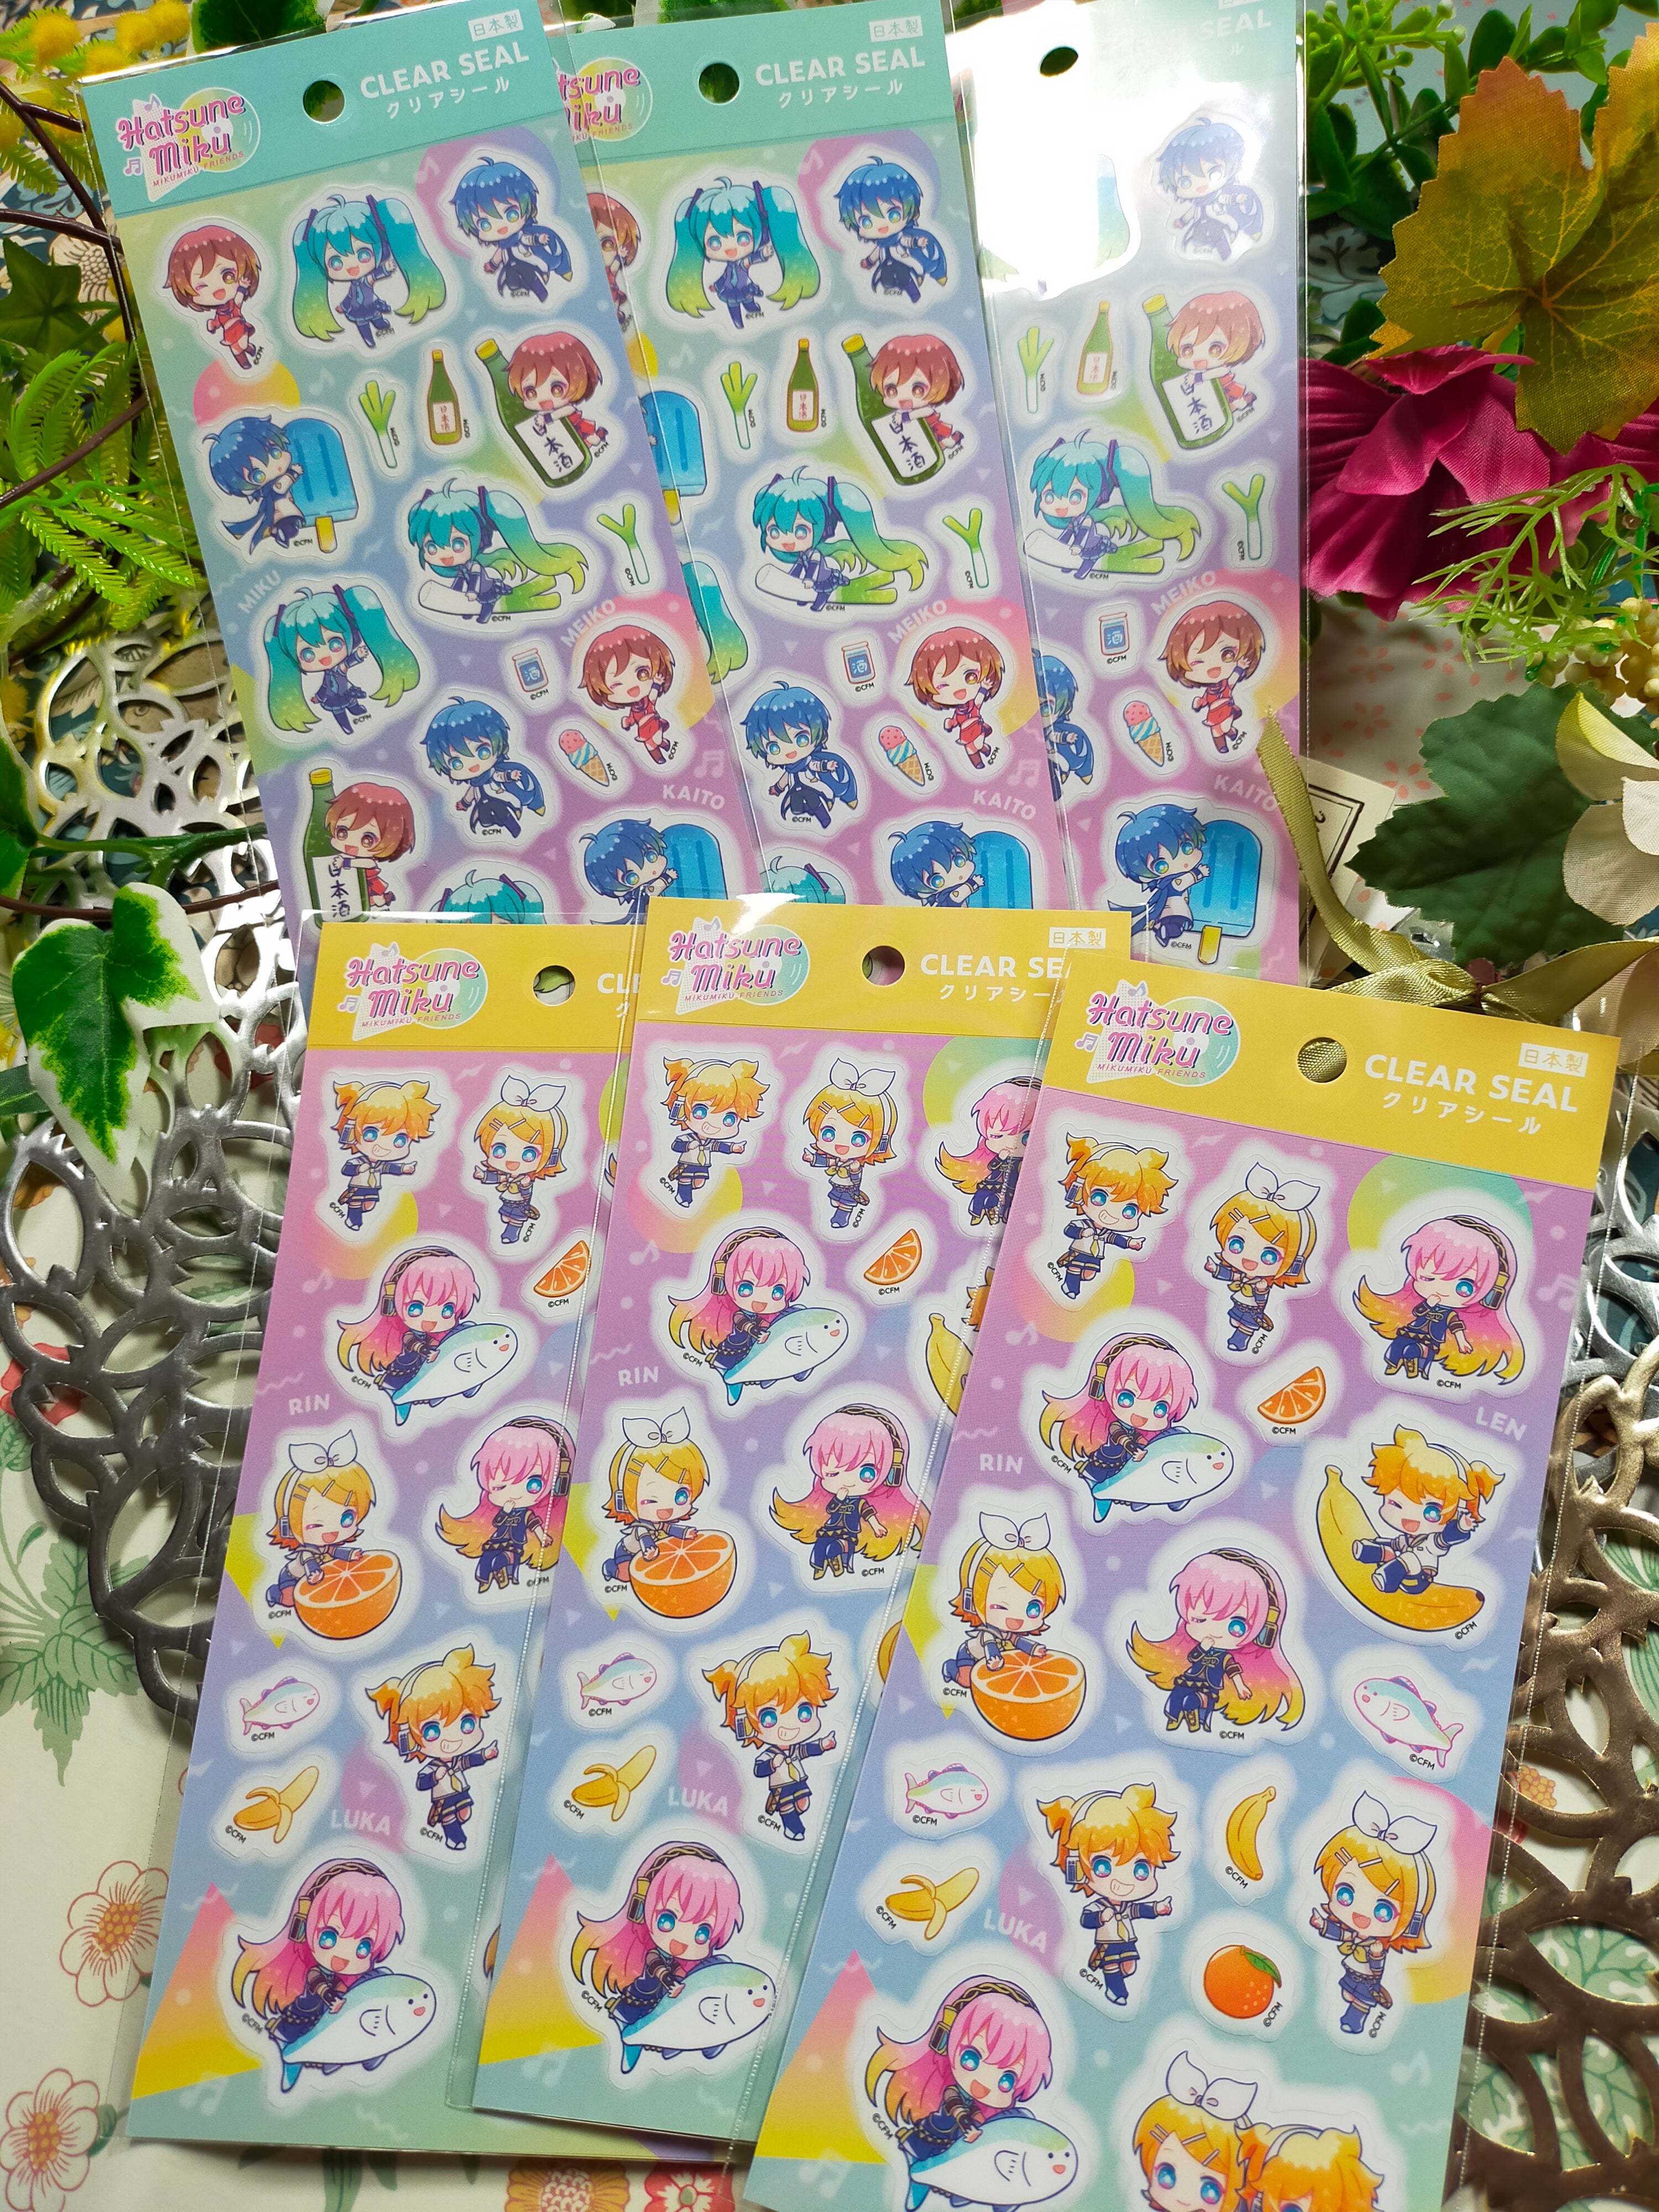 Hatsune Miku sticker set of 2